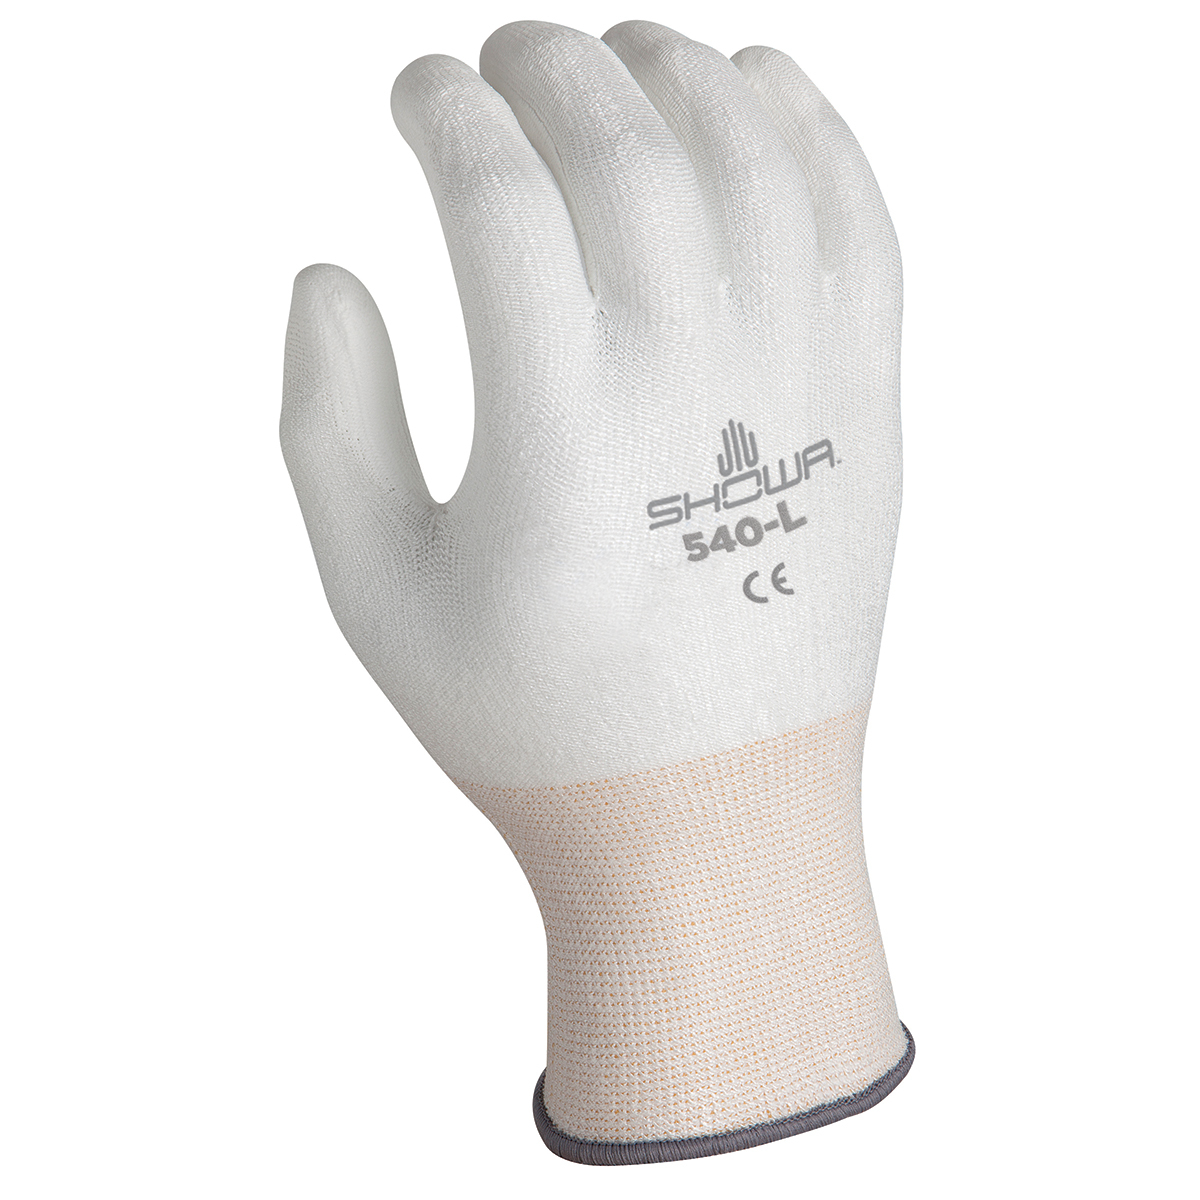 SHOWA® 540 13 Gauge High Performance Polyethylene Cut Resistant Gloves With Polyurethane Coating